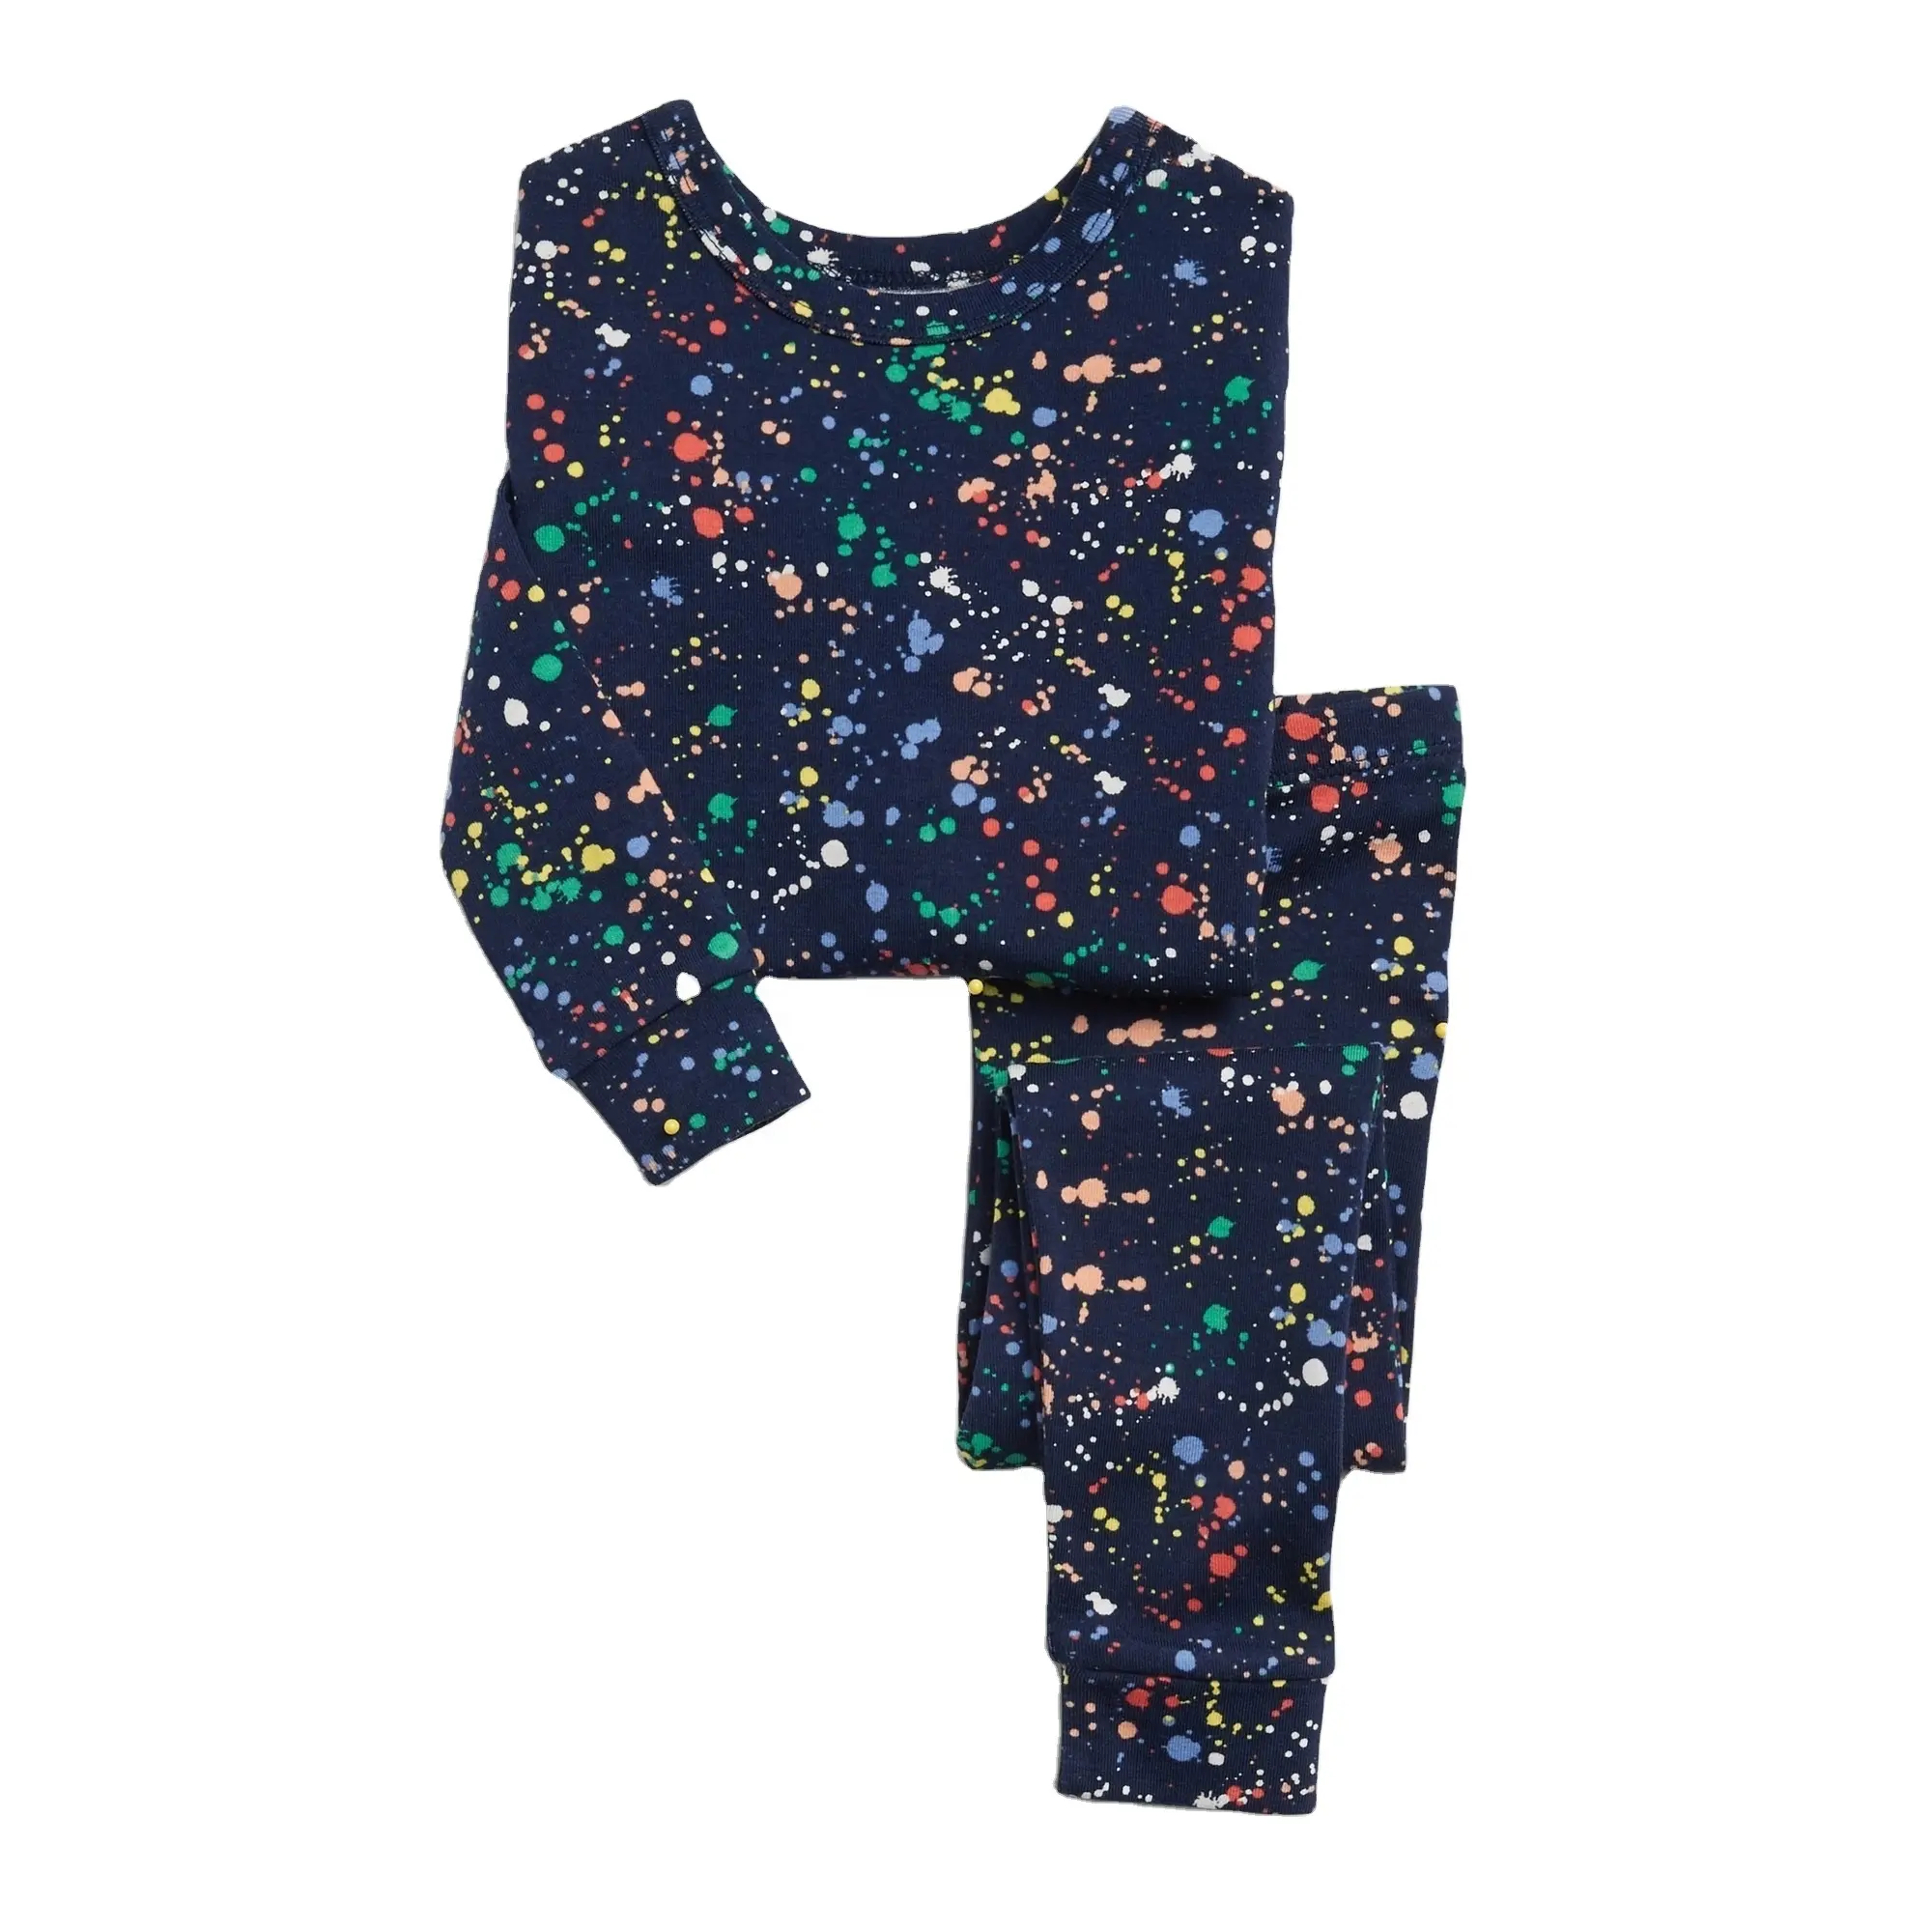 Paint splash graphic kids sleepwear Boys Clothing Sets Cotton OEM Customized 2-14 yrs Children pajama set